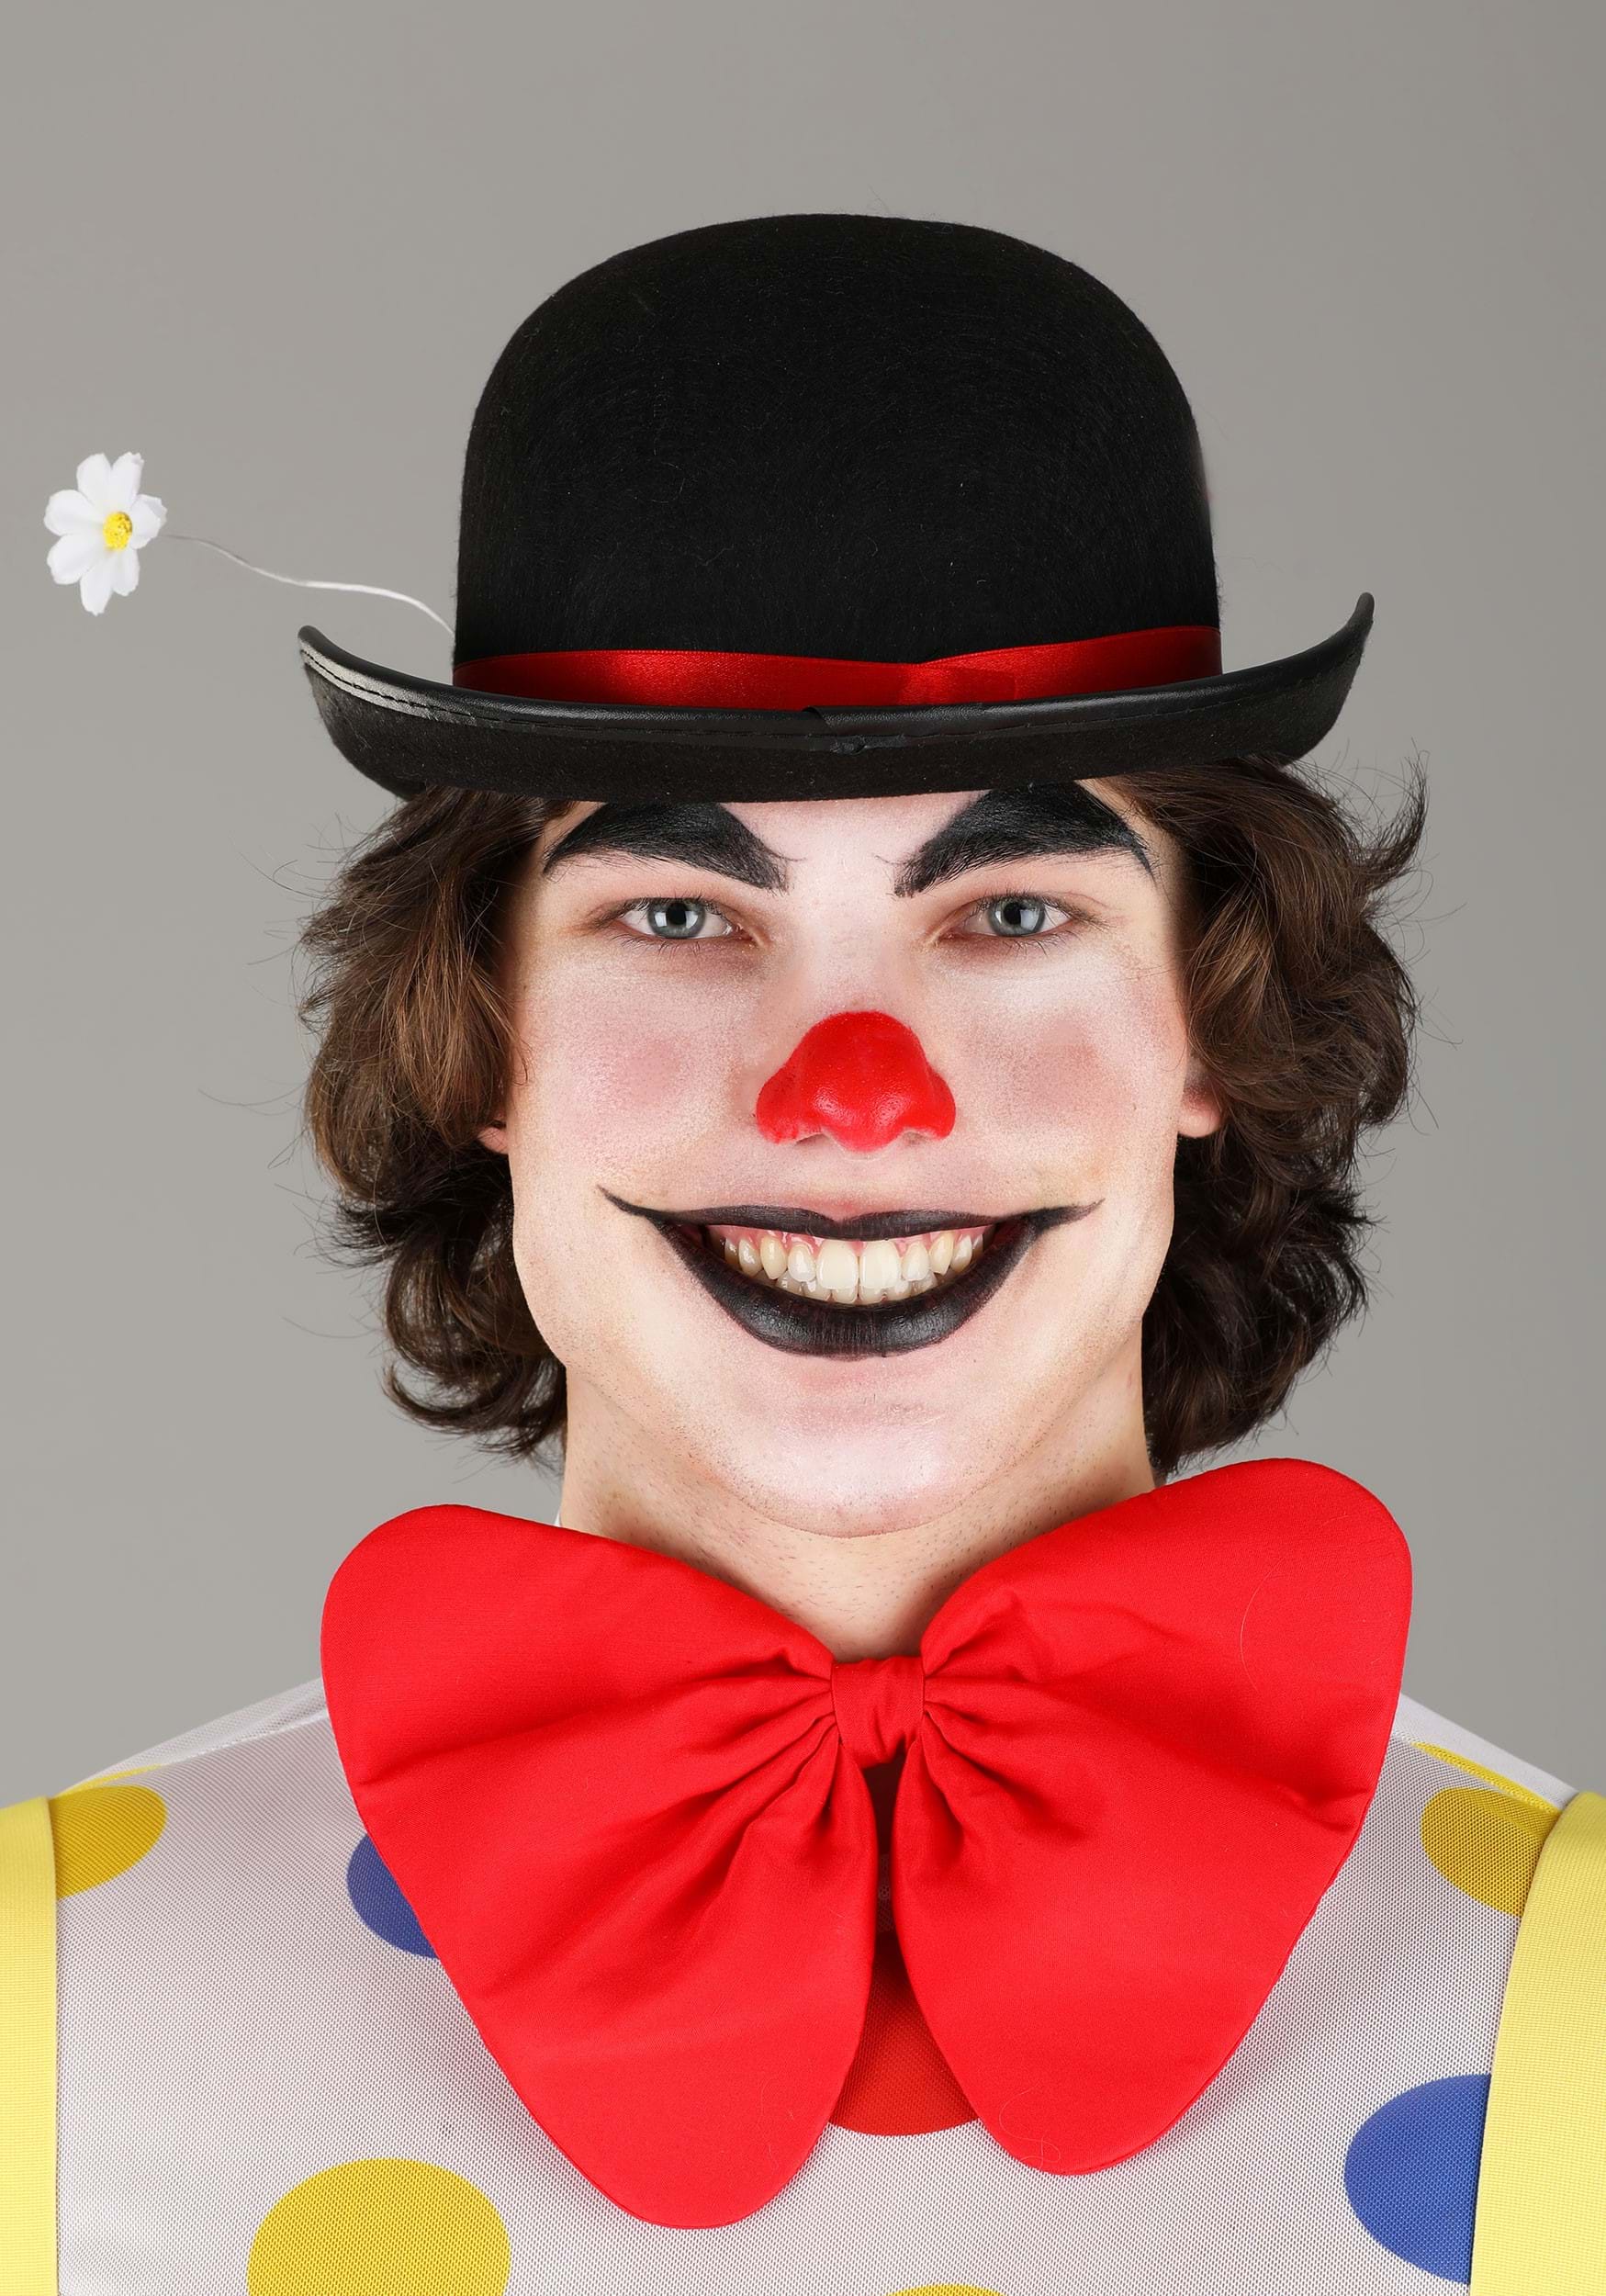 Sexy Clown Costume For Men